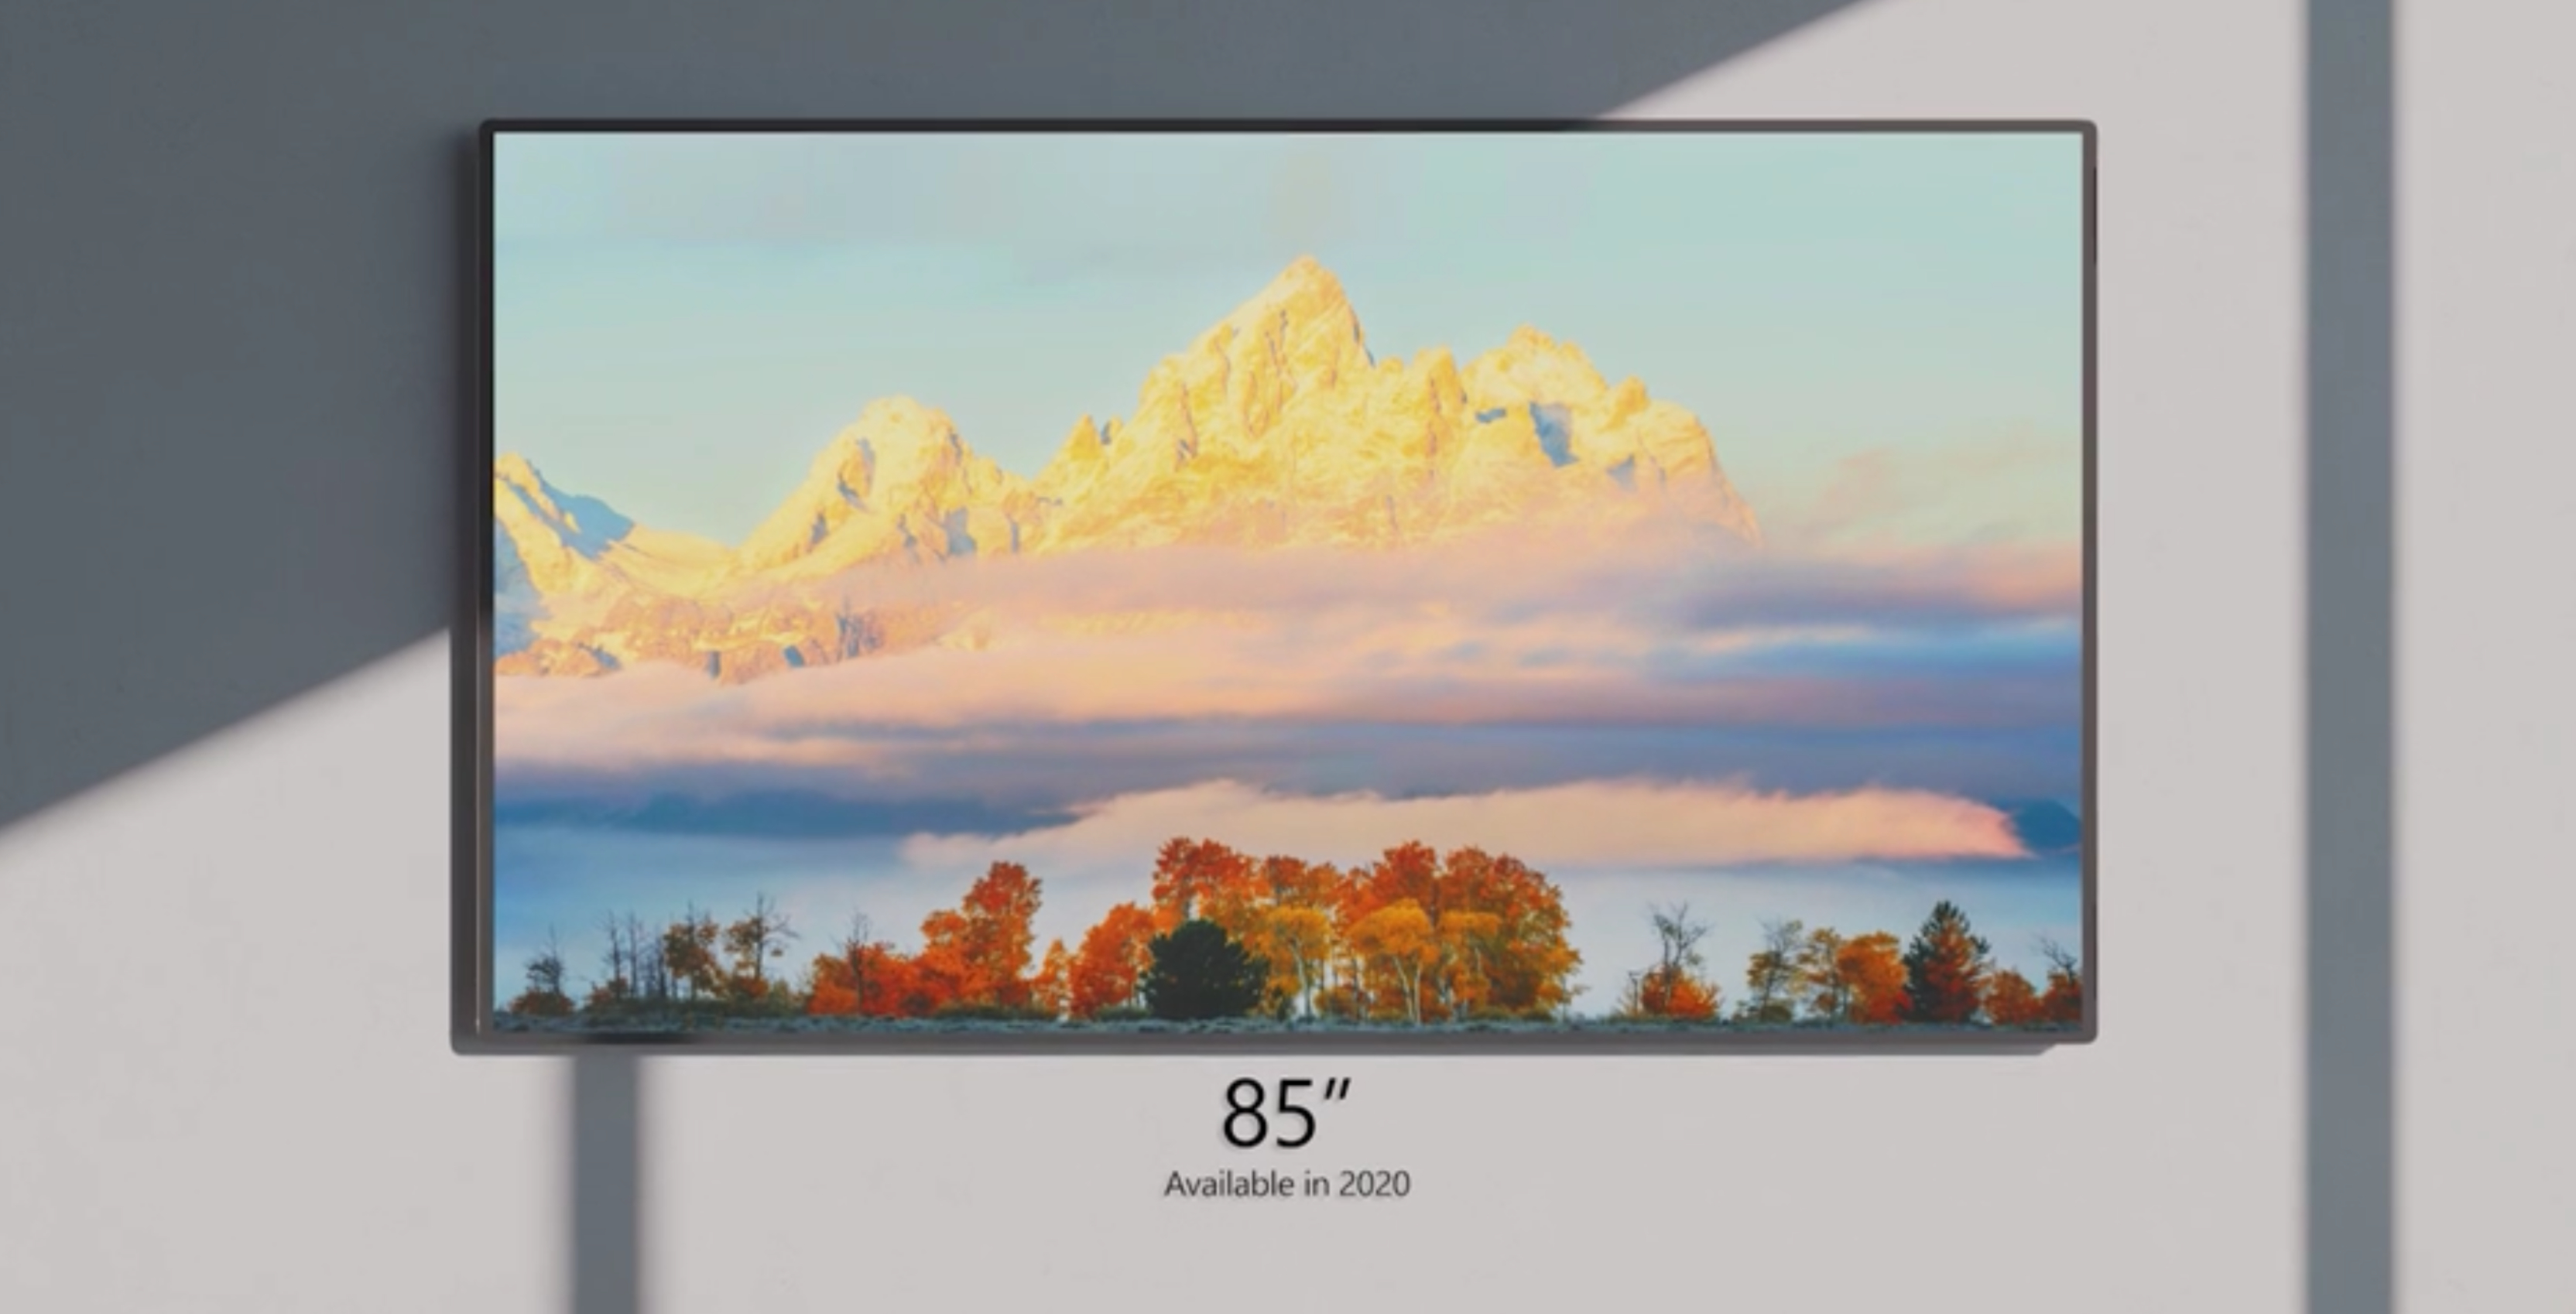 Microsoft 85-inch Surface Hub 2S